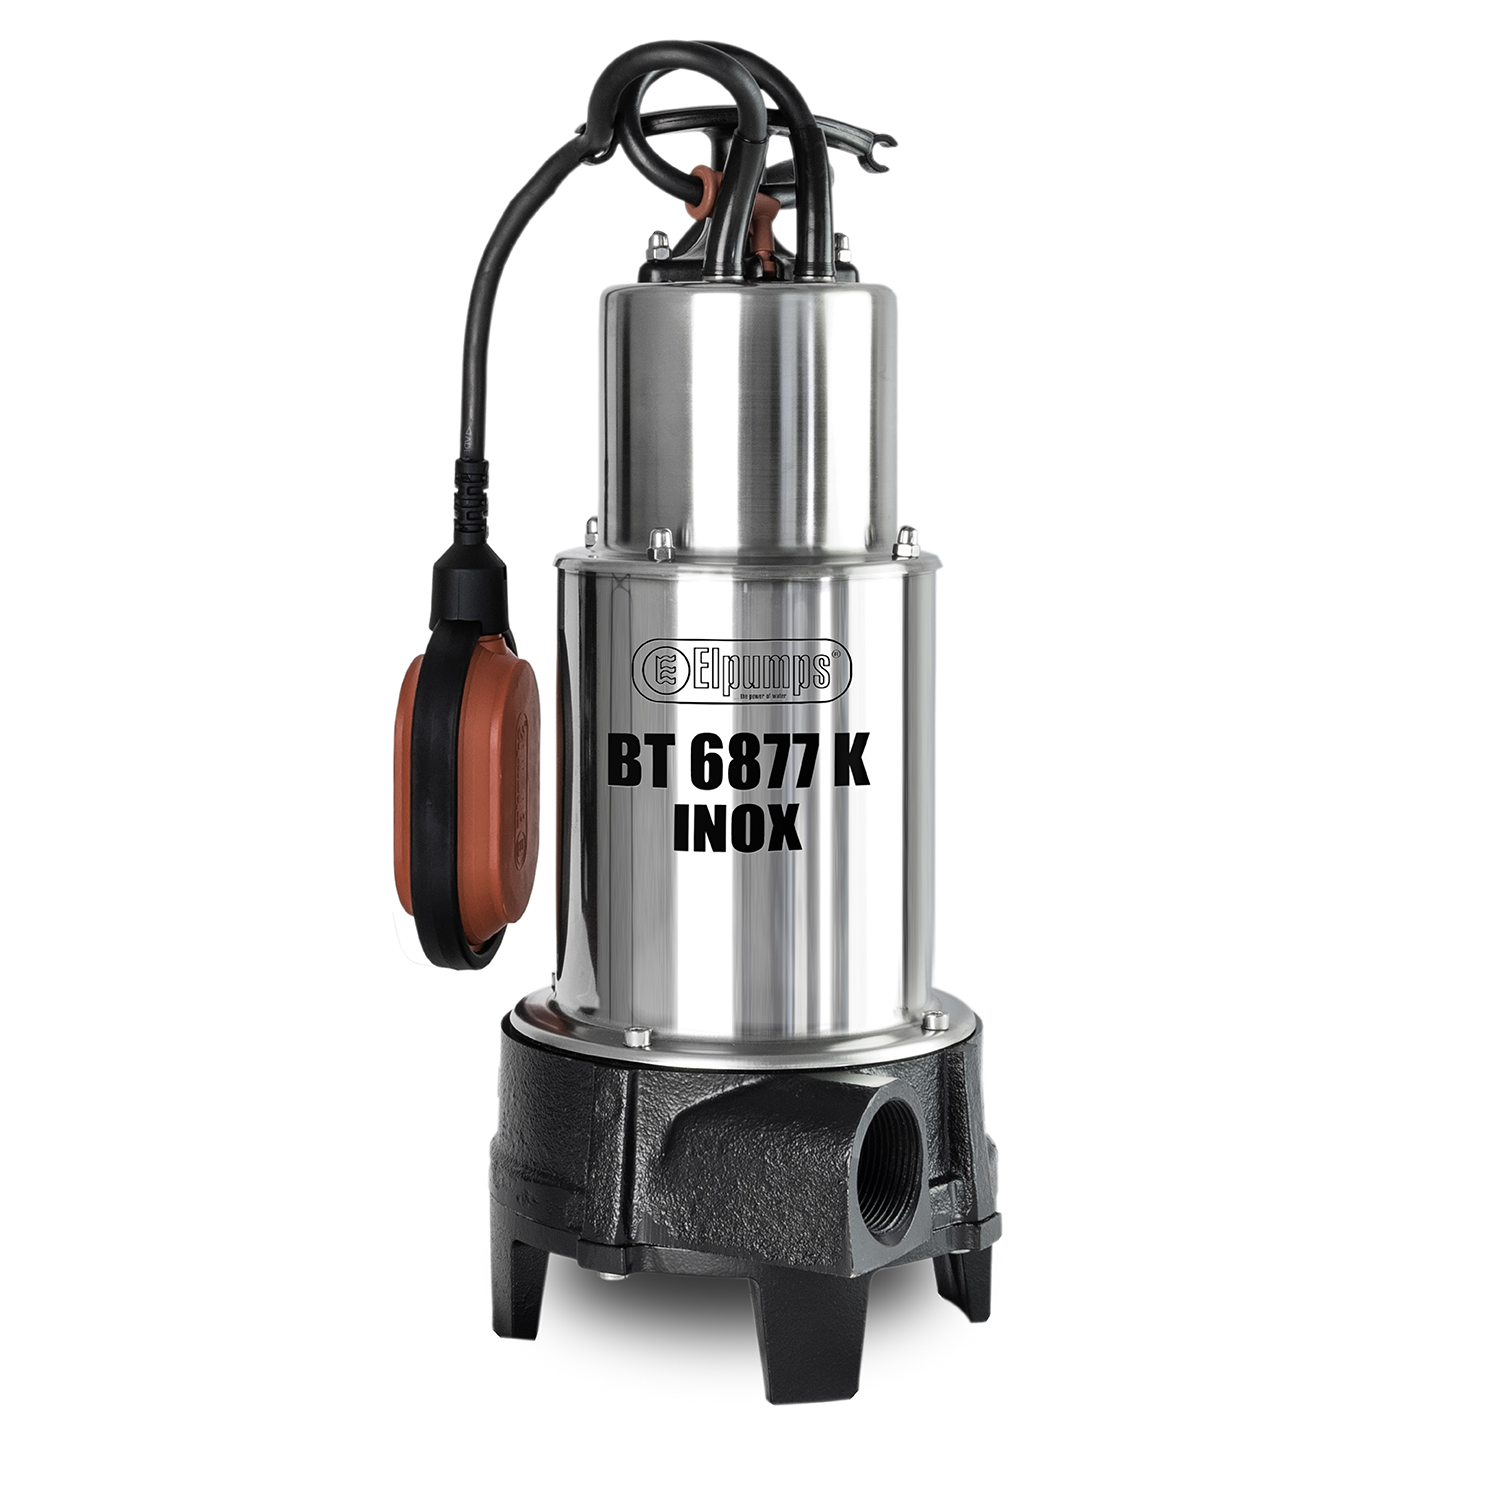 BT 6877 K INOX Submersible cutter pump for sewage